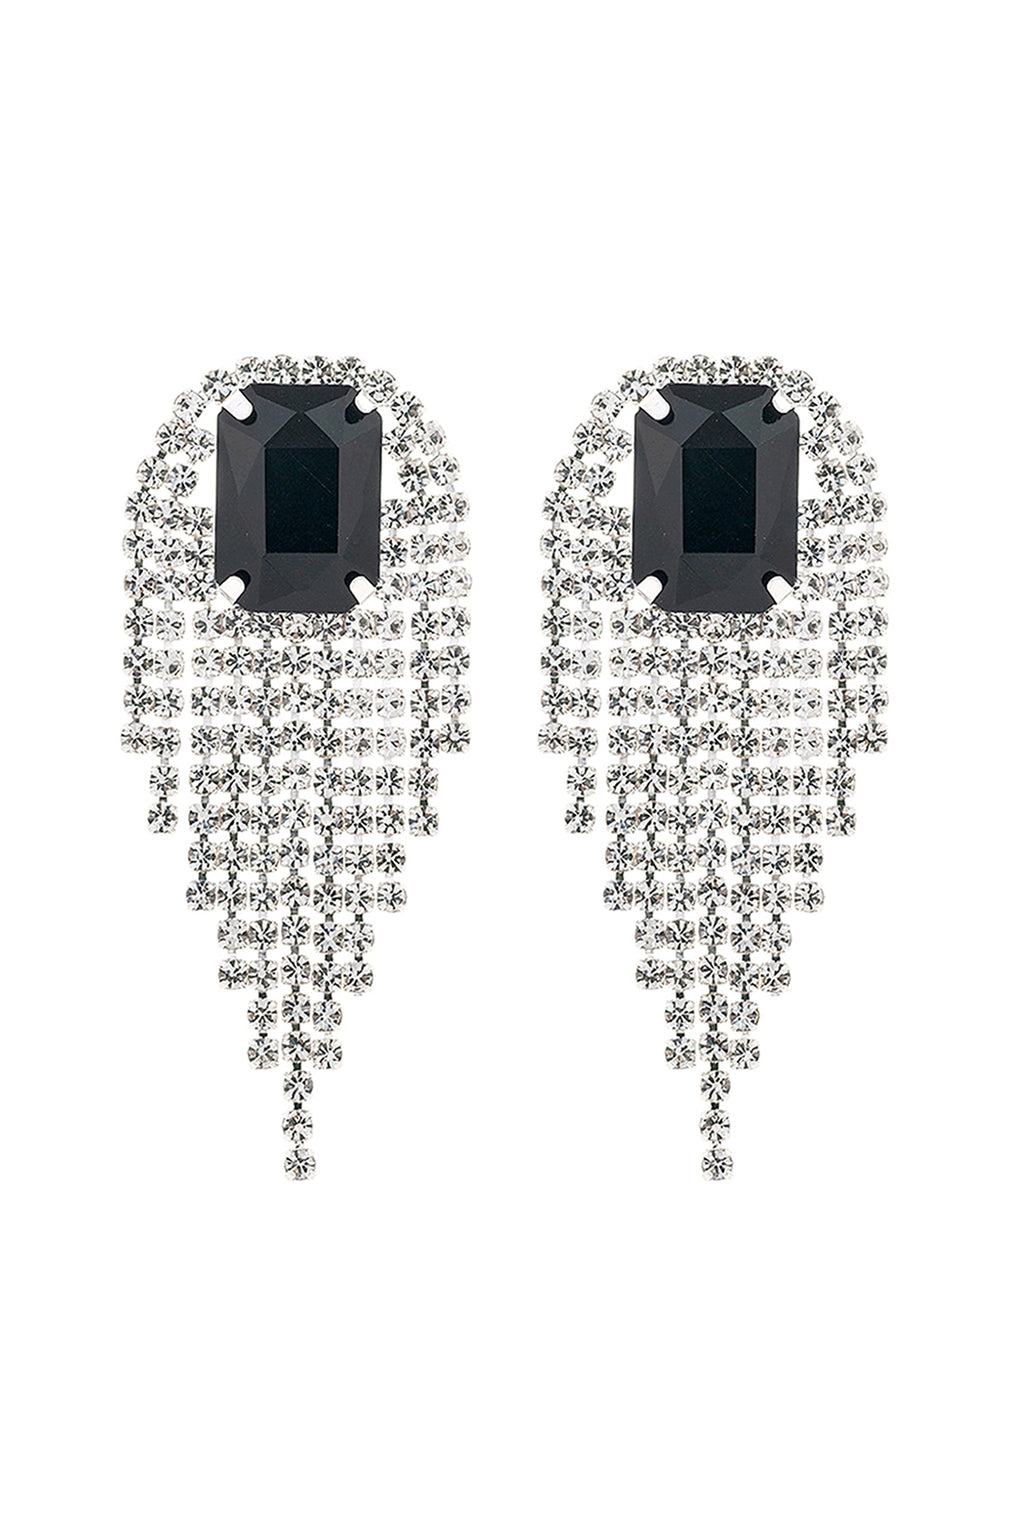 Rhinestone Square Fringe Tassel Earrings Black Silver - Pack of 6